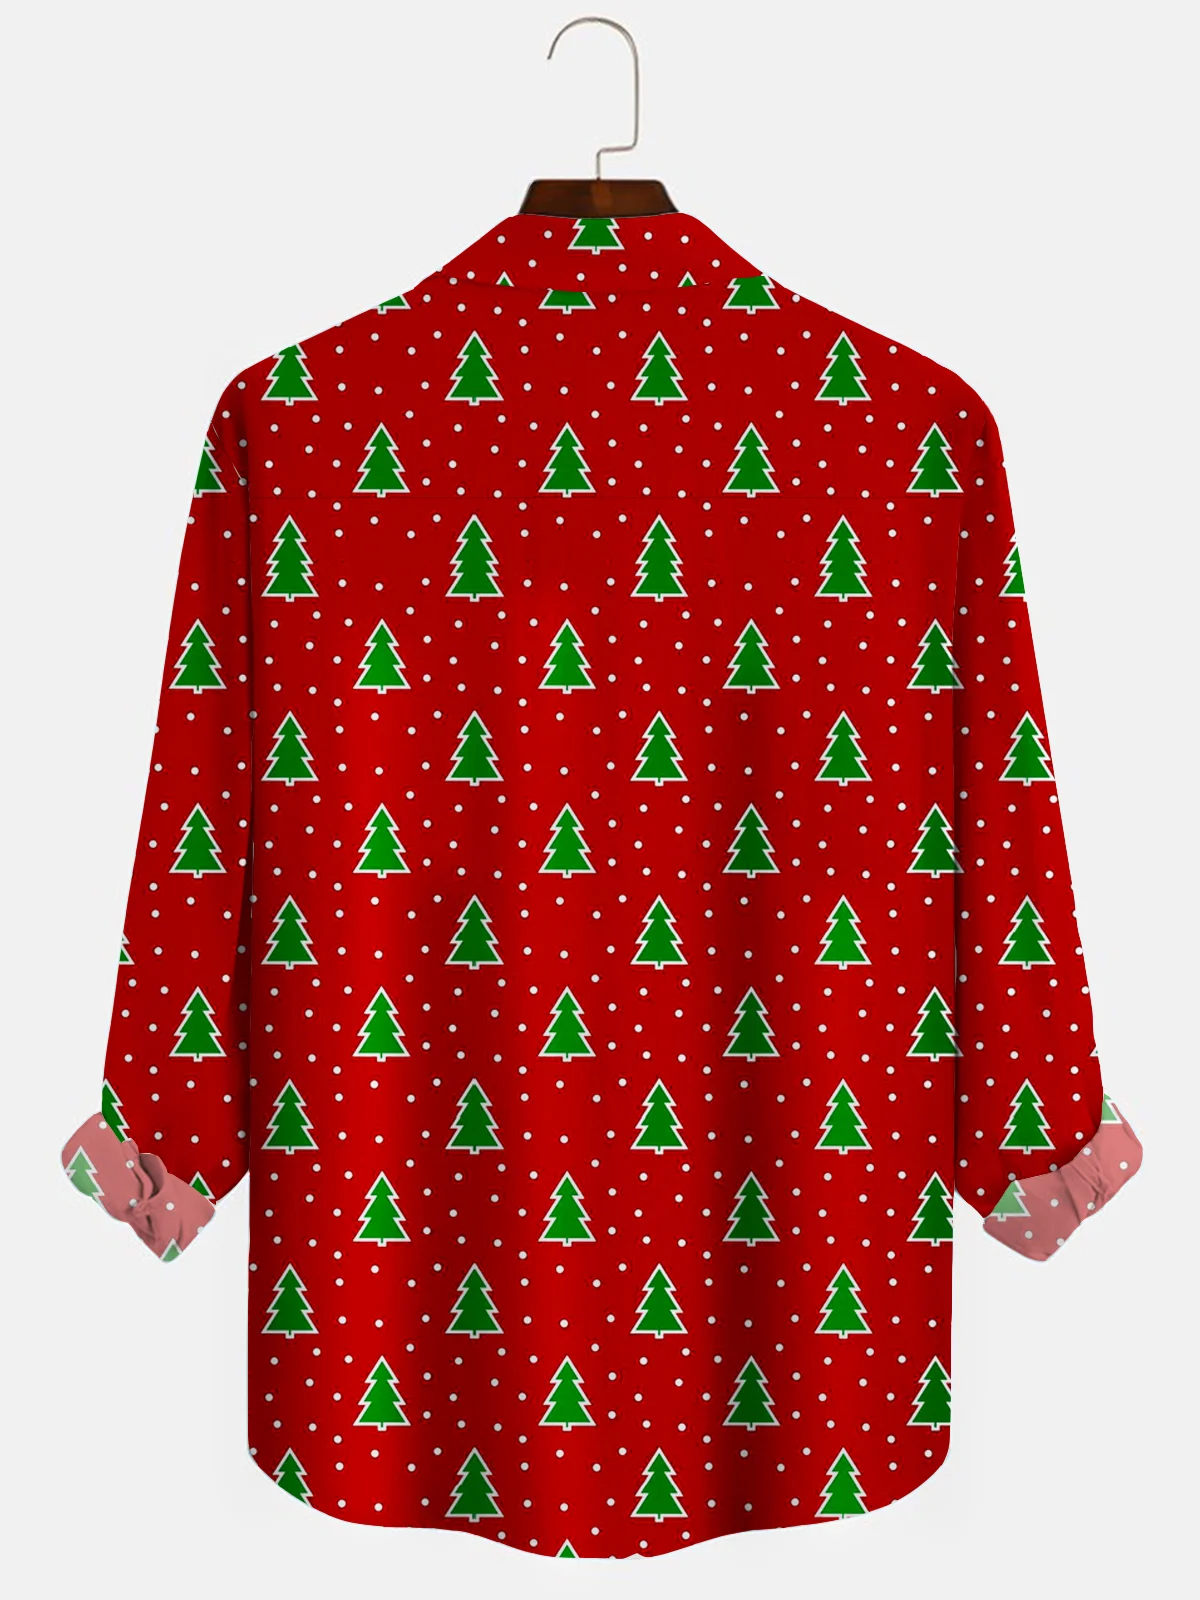 Royaura Christmas Red Men's Long Sleeve Shirts Christmas Tree HOHOHO Cartoon Art Camp Button Shirts